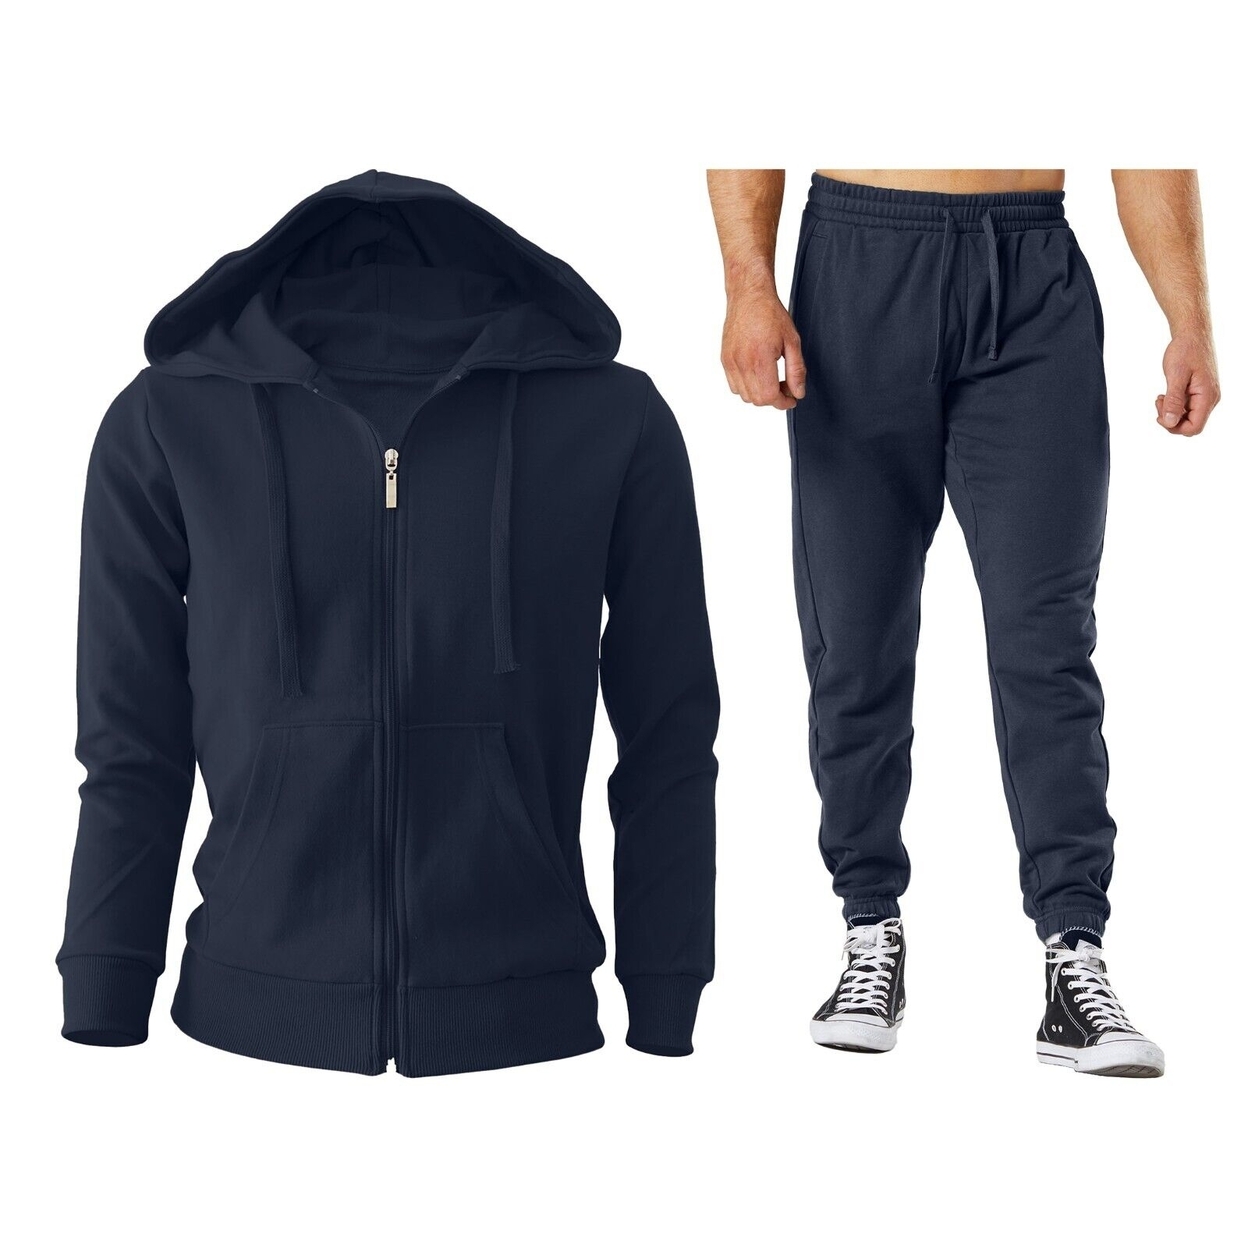 2-Piece: Men's Winter Warm Cozy Athletic Multi-Pockets BIG & TALL Sweatsuit Set - Navy, Medium